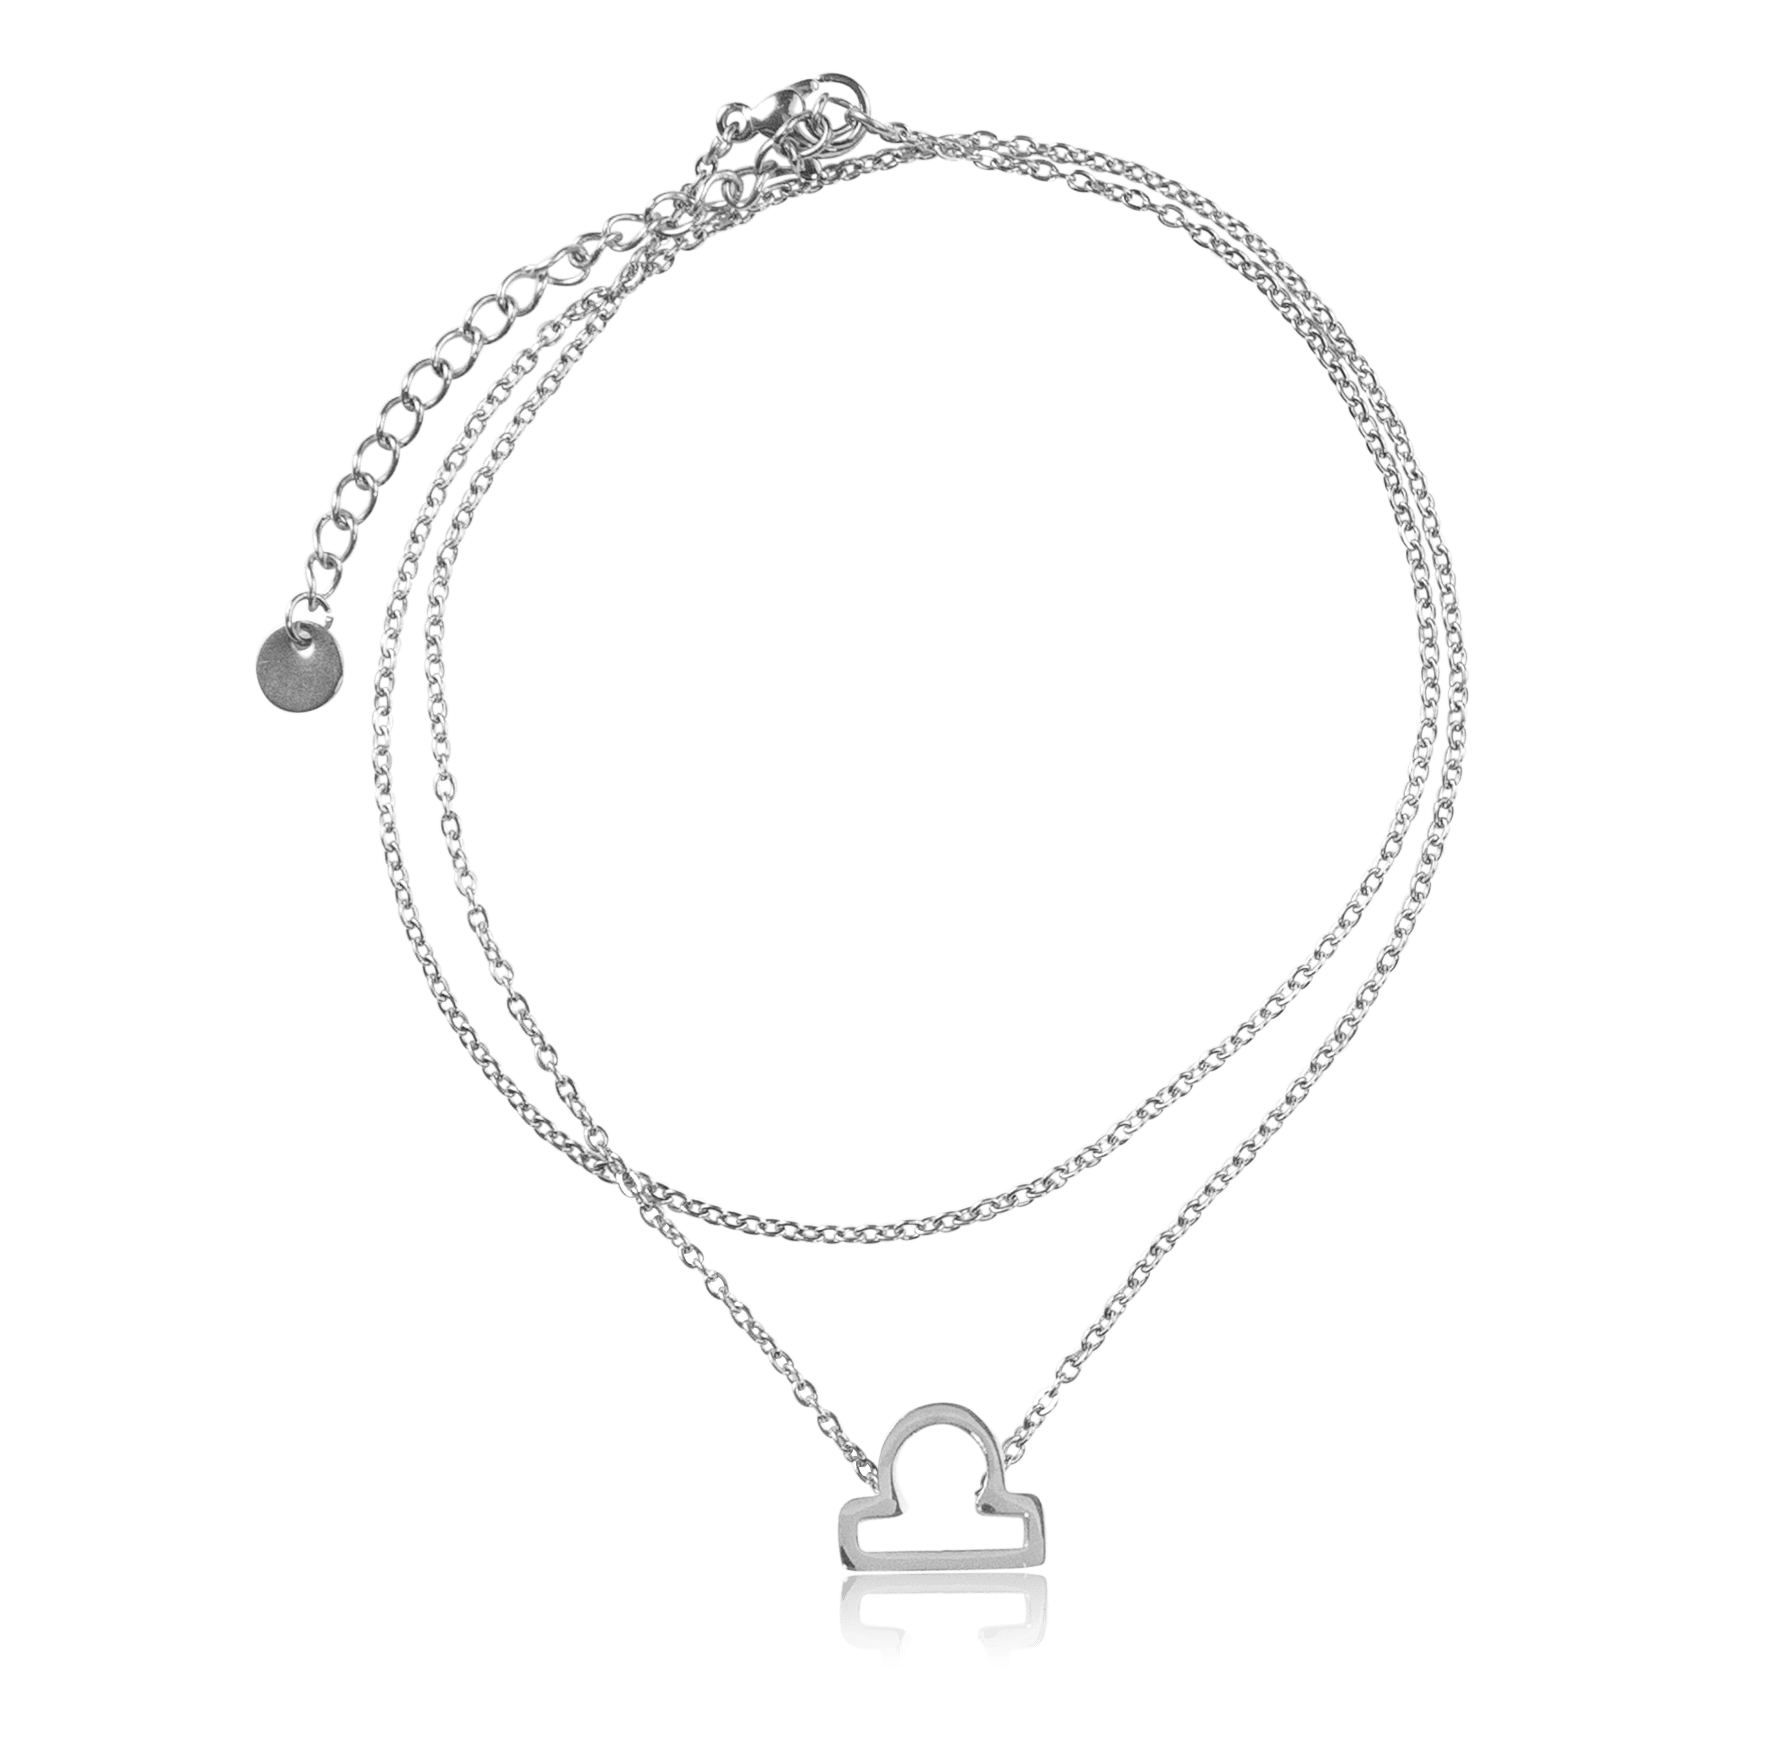 bianco rosso Bracelet Libra - Bracelet cyprus greece jewelry gift free shipping europe worldwide